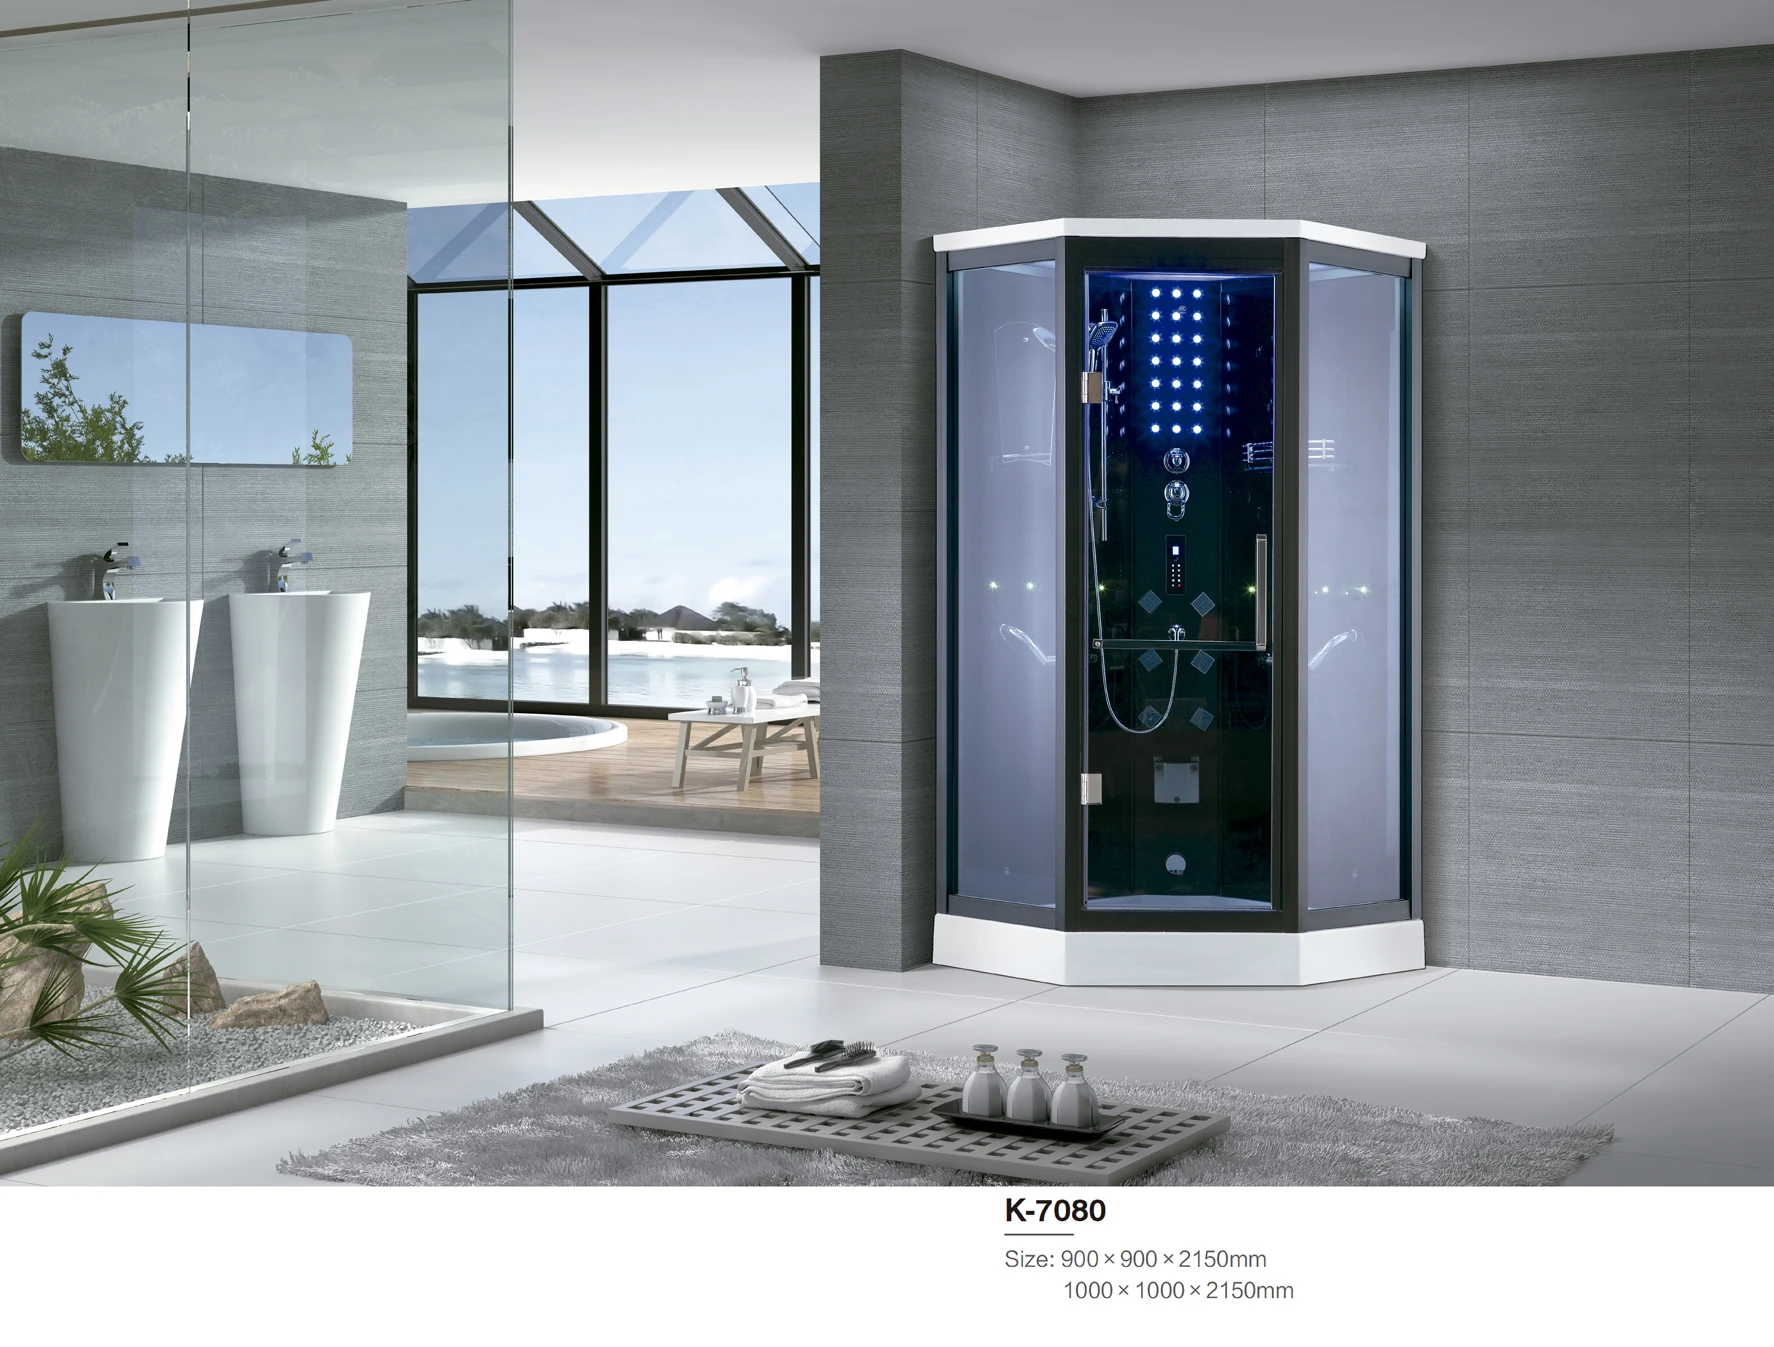 European bath indoor digital cubicle control panel whirlpool acrylic massage soaking jet shower steam room K7080